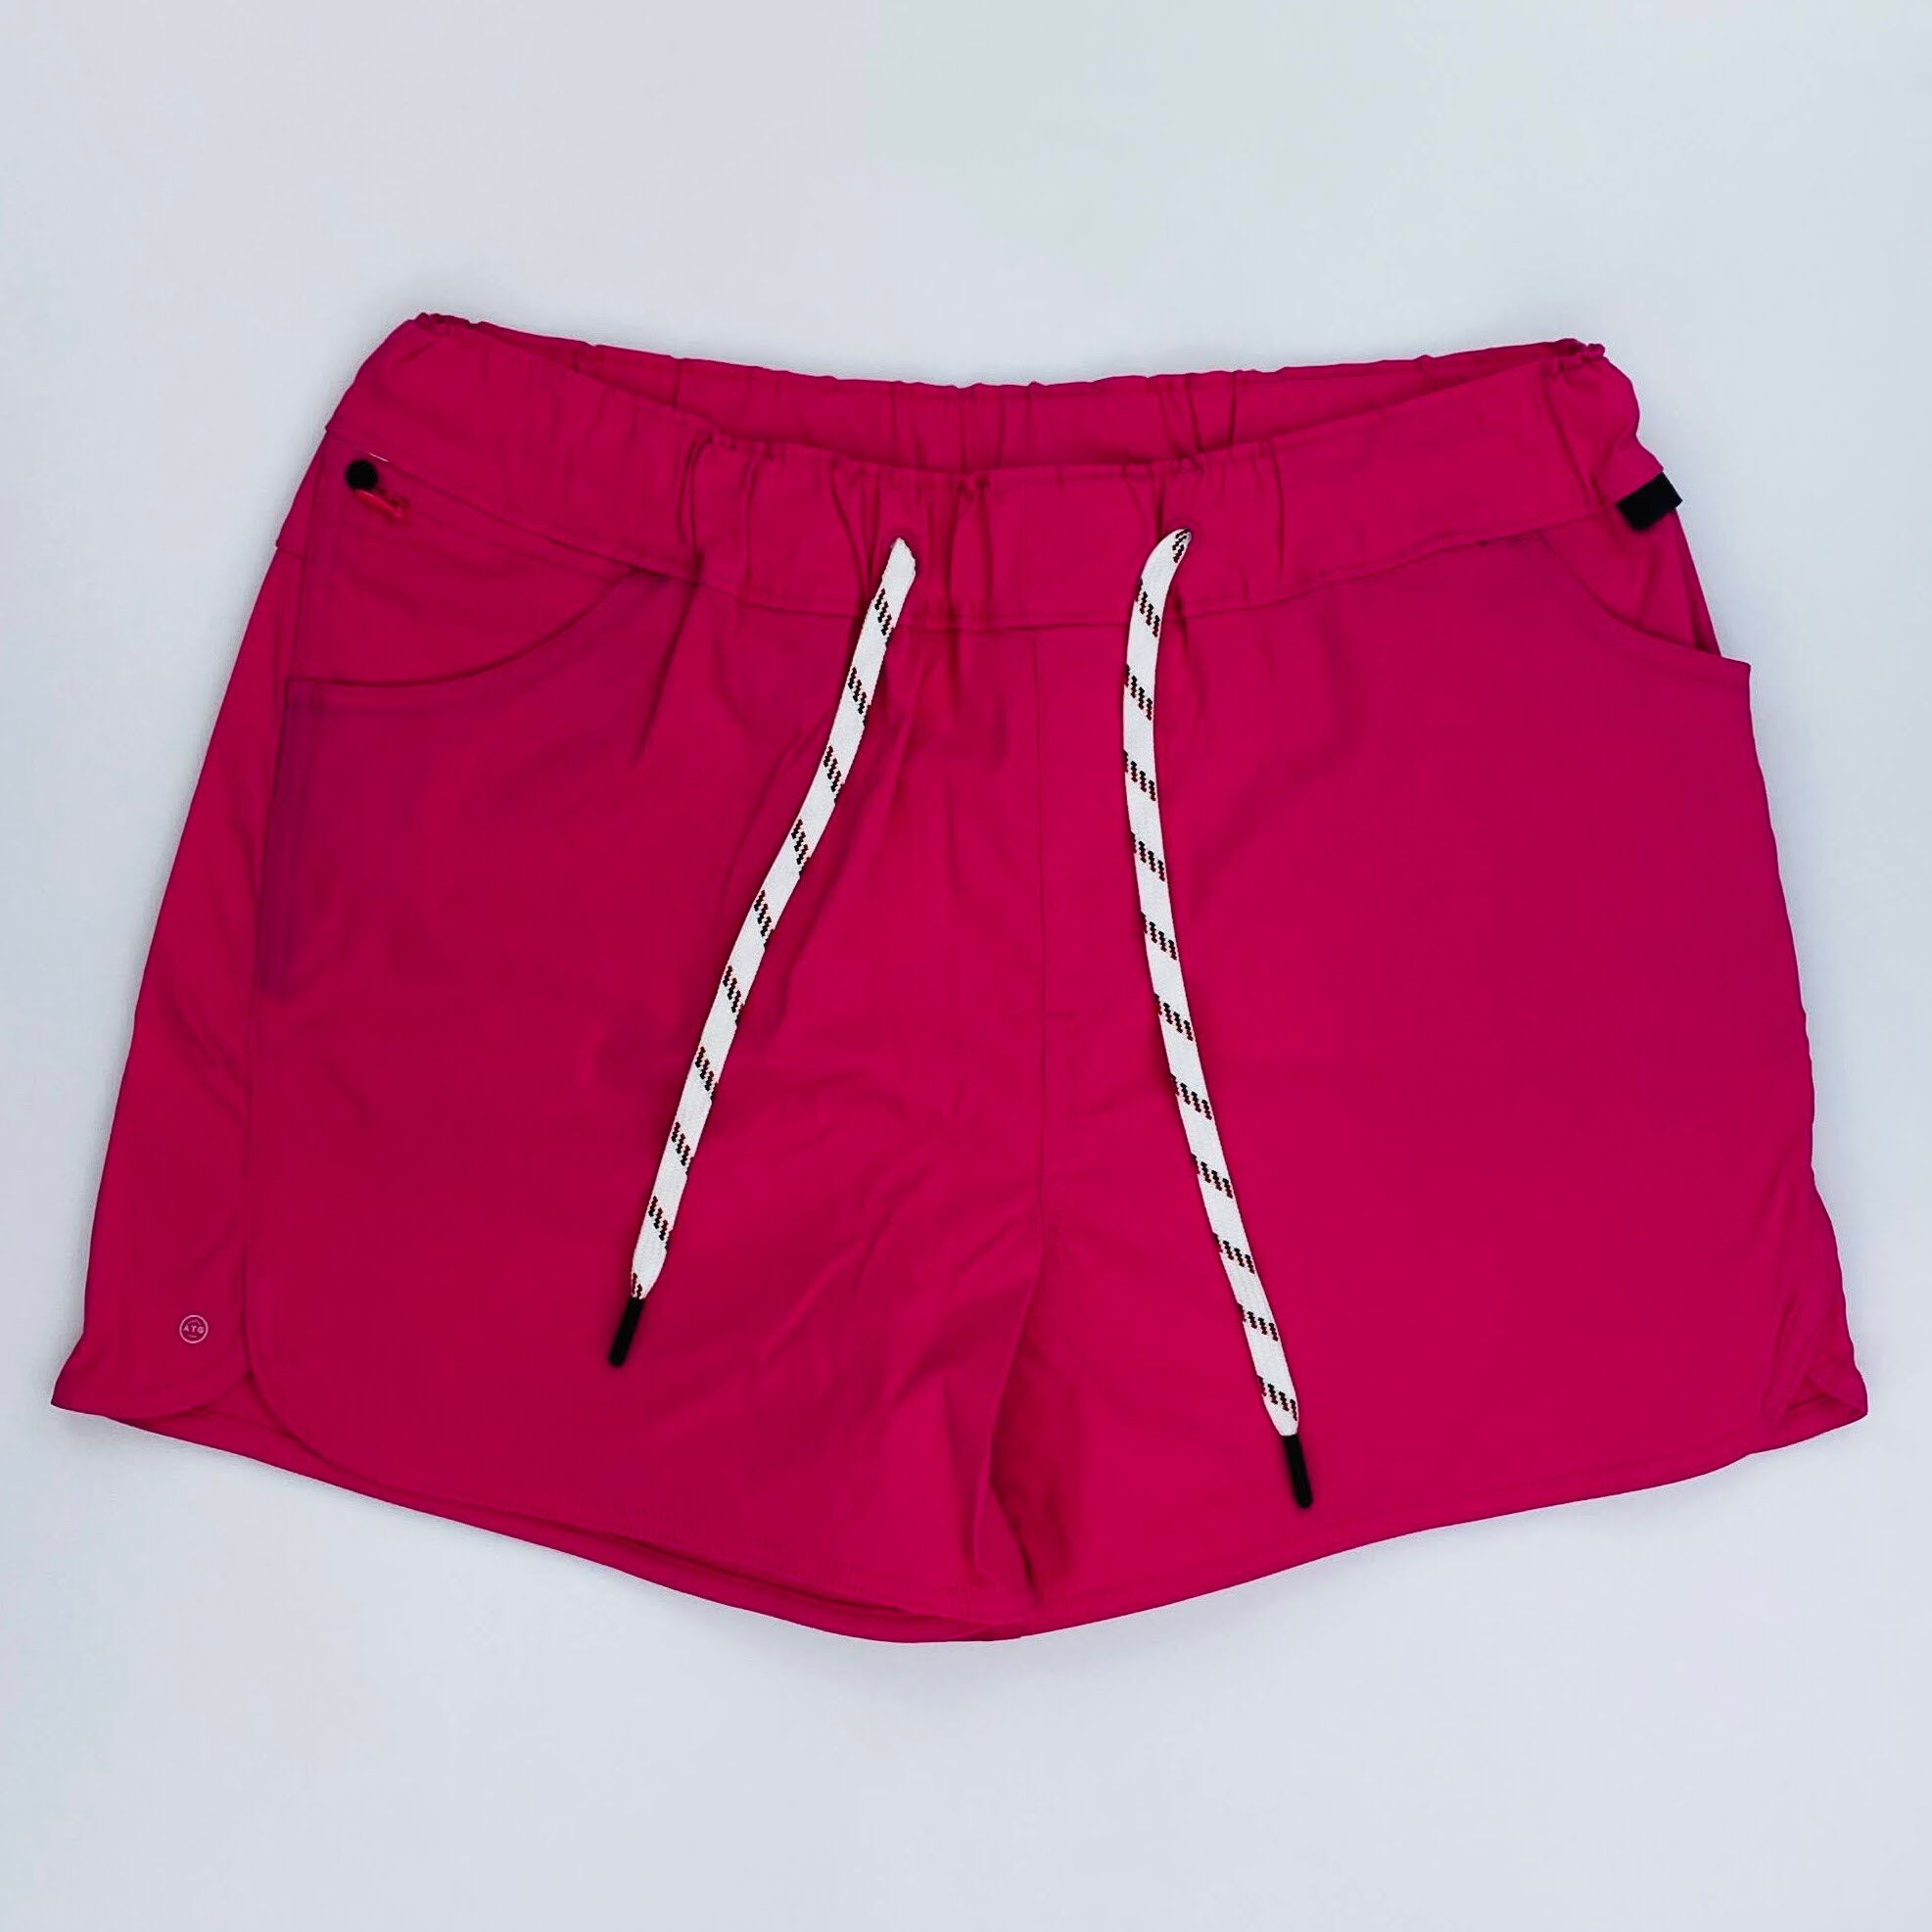 Wrangler Drawstring Short - Second Hand Shorts - Women's - Pink - US 28 | Hardloop